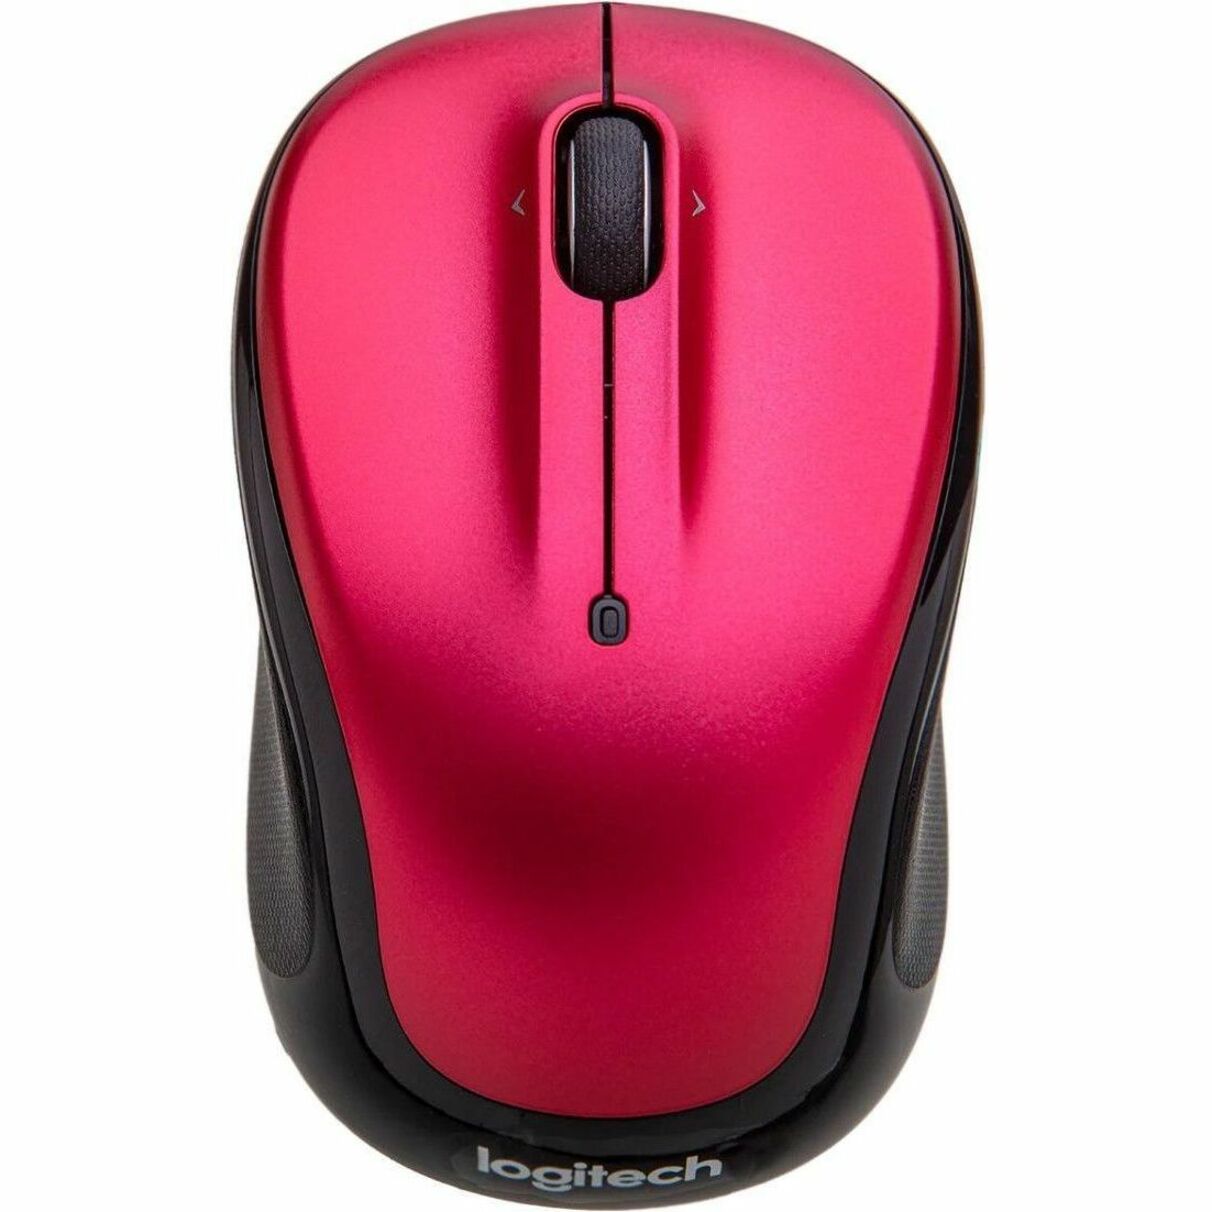 Logitech 910-006827 M325s Wireless Mouse, Brilliant Red, 3 Year Warranty, Small Size, 1000 dpi, 2.4 GHz Wireless Technology